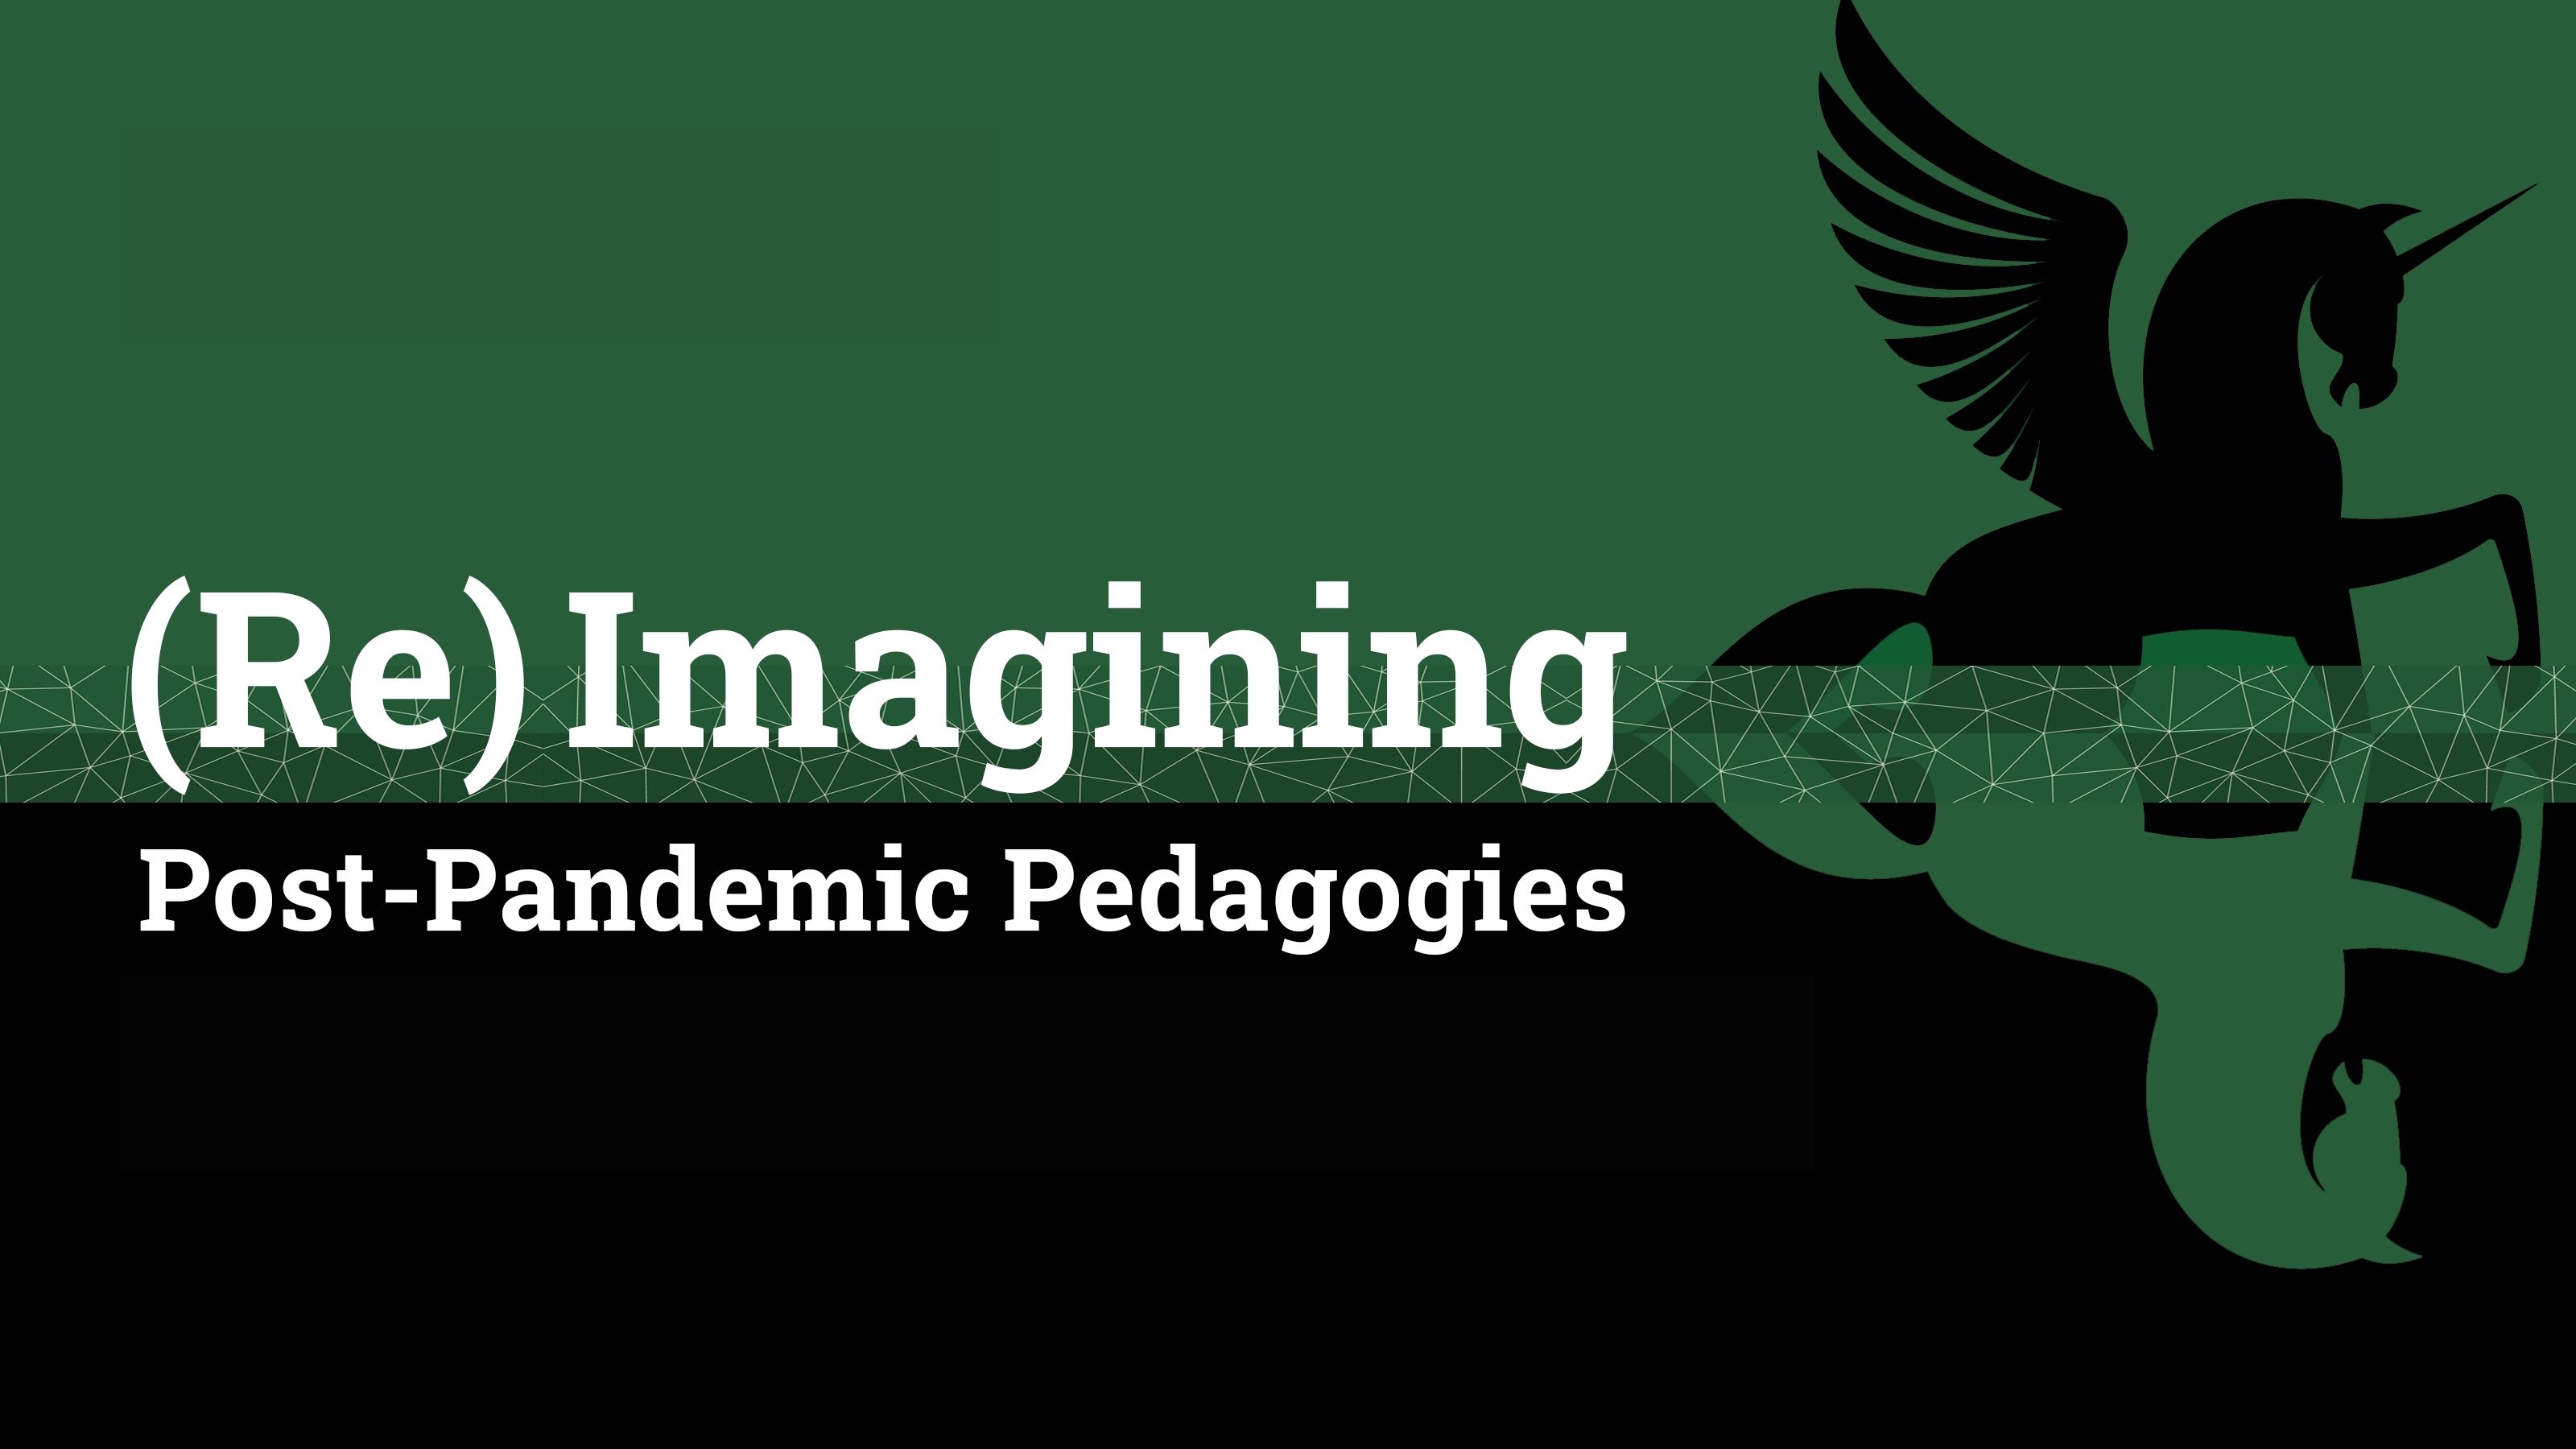 reimagining-post-pandemic-pedagogies.png